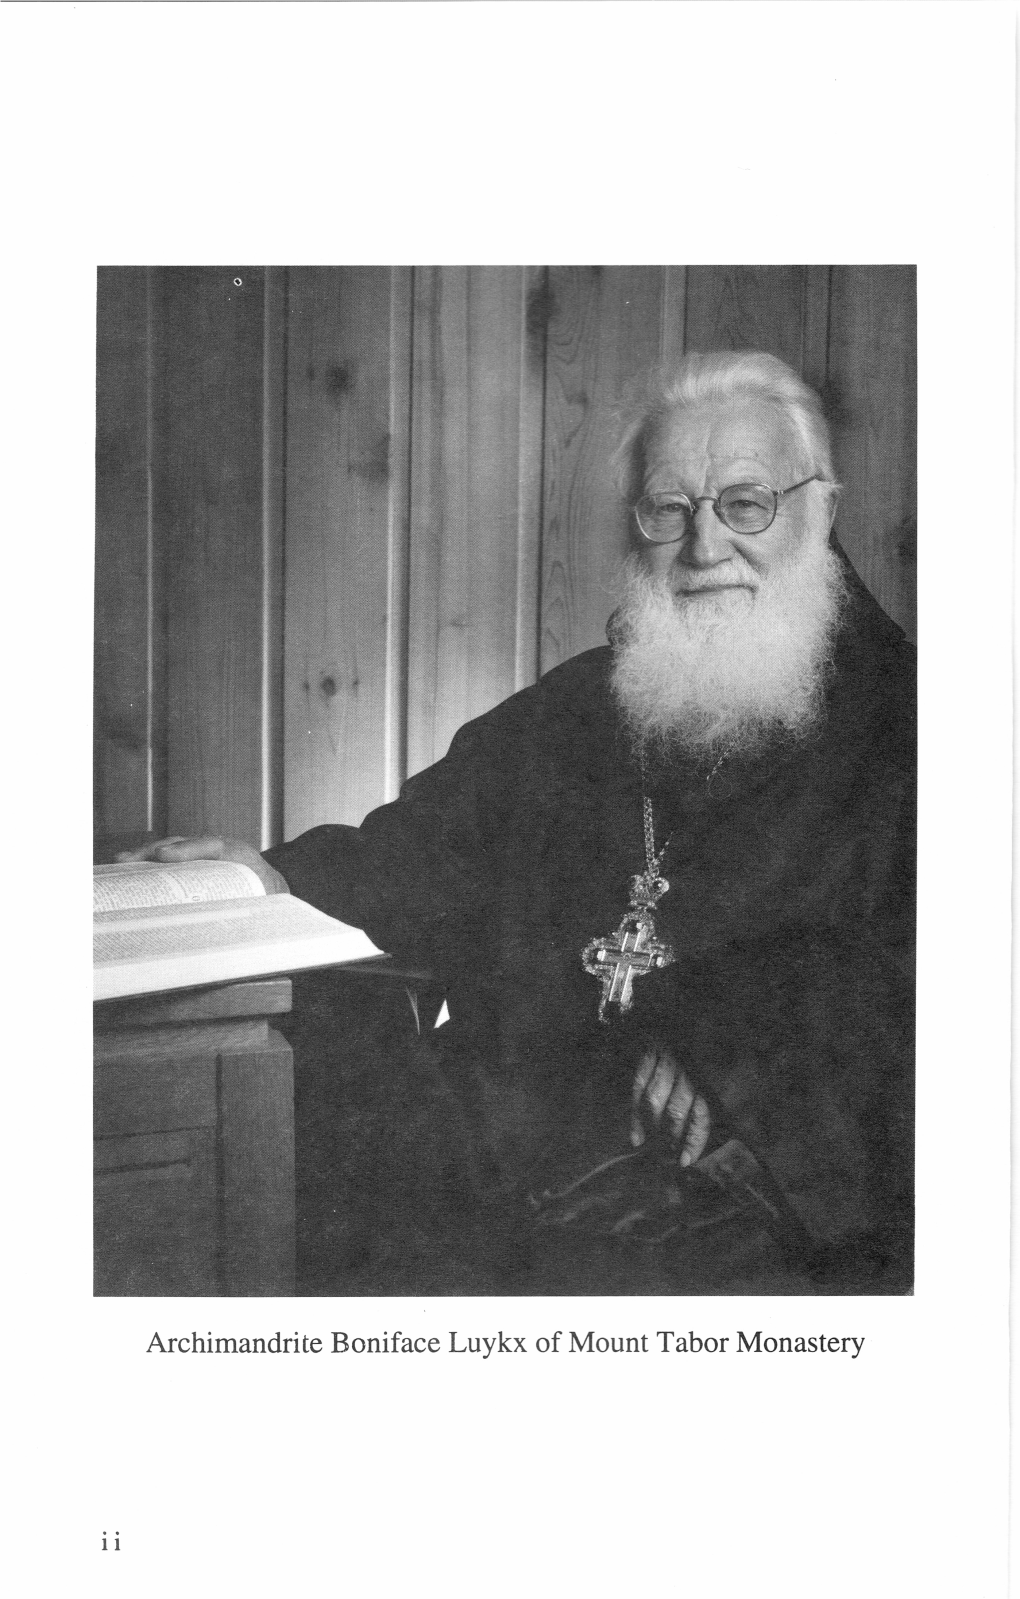 Archimandrite Boniface Luykx of Mount Tabor Monastery